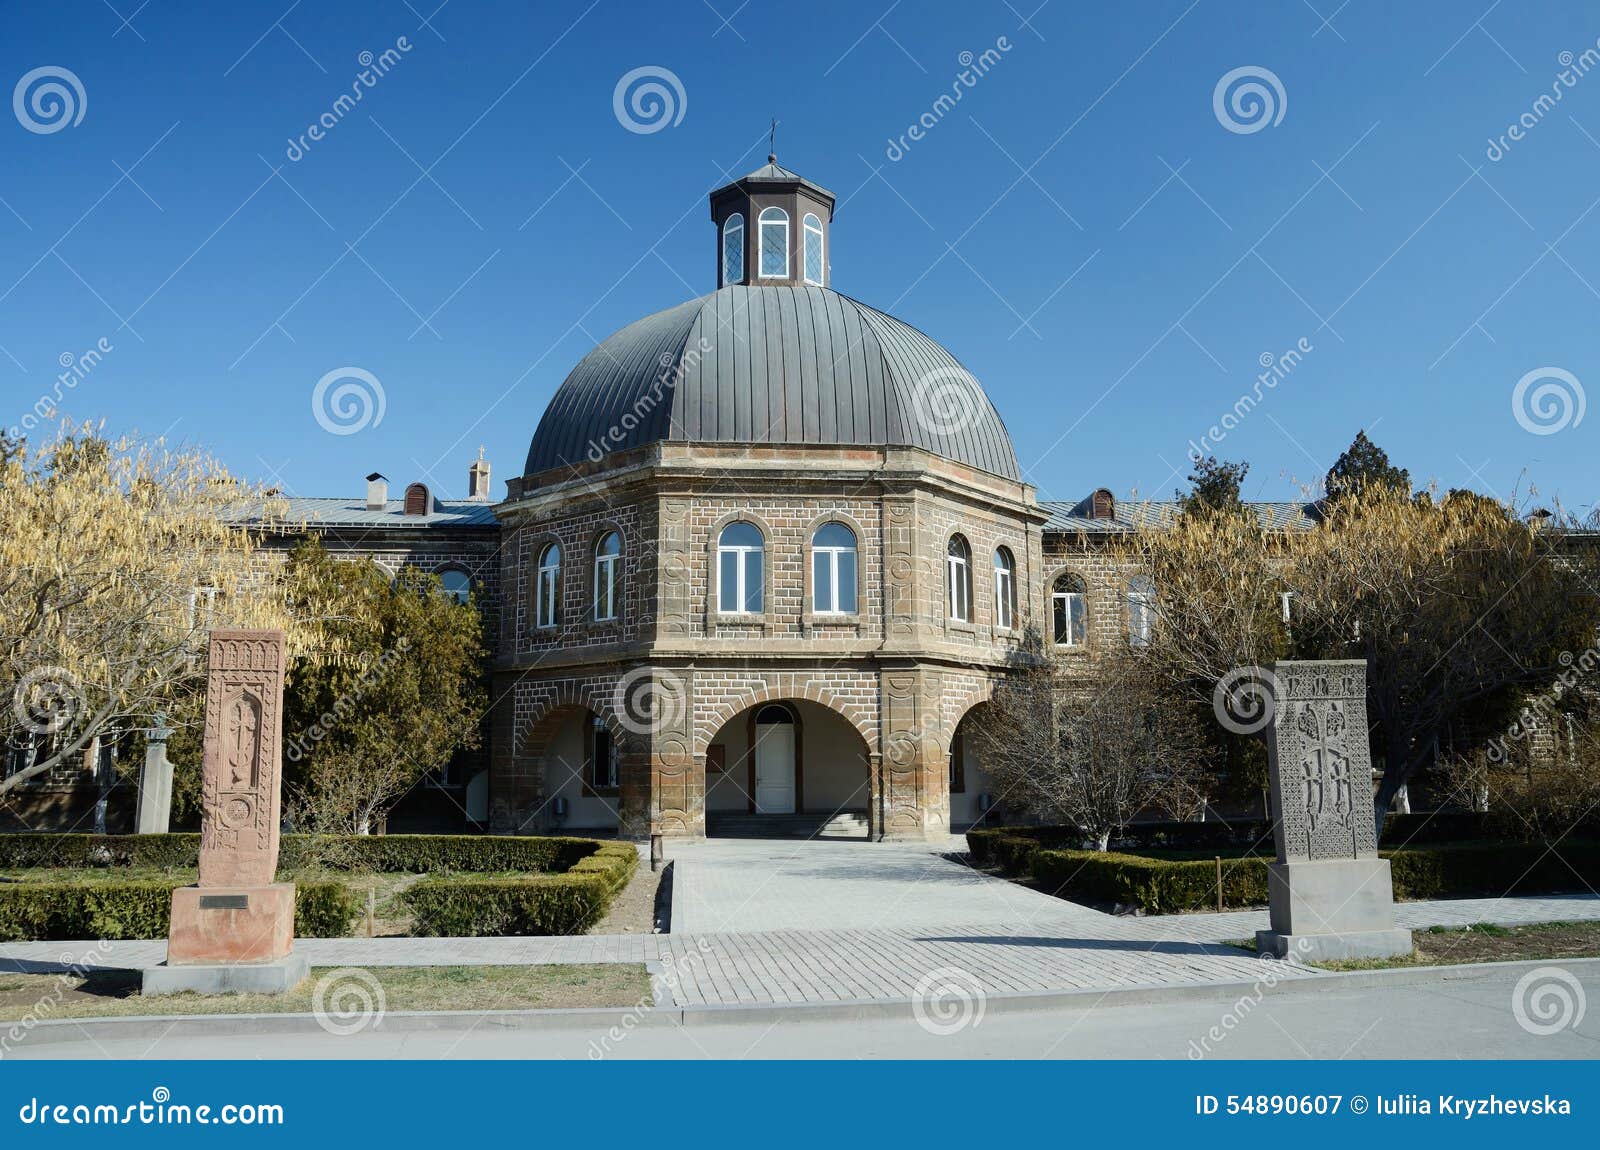 gevorkian theological seminary of st. echmiadzin,armenia